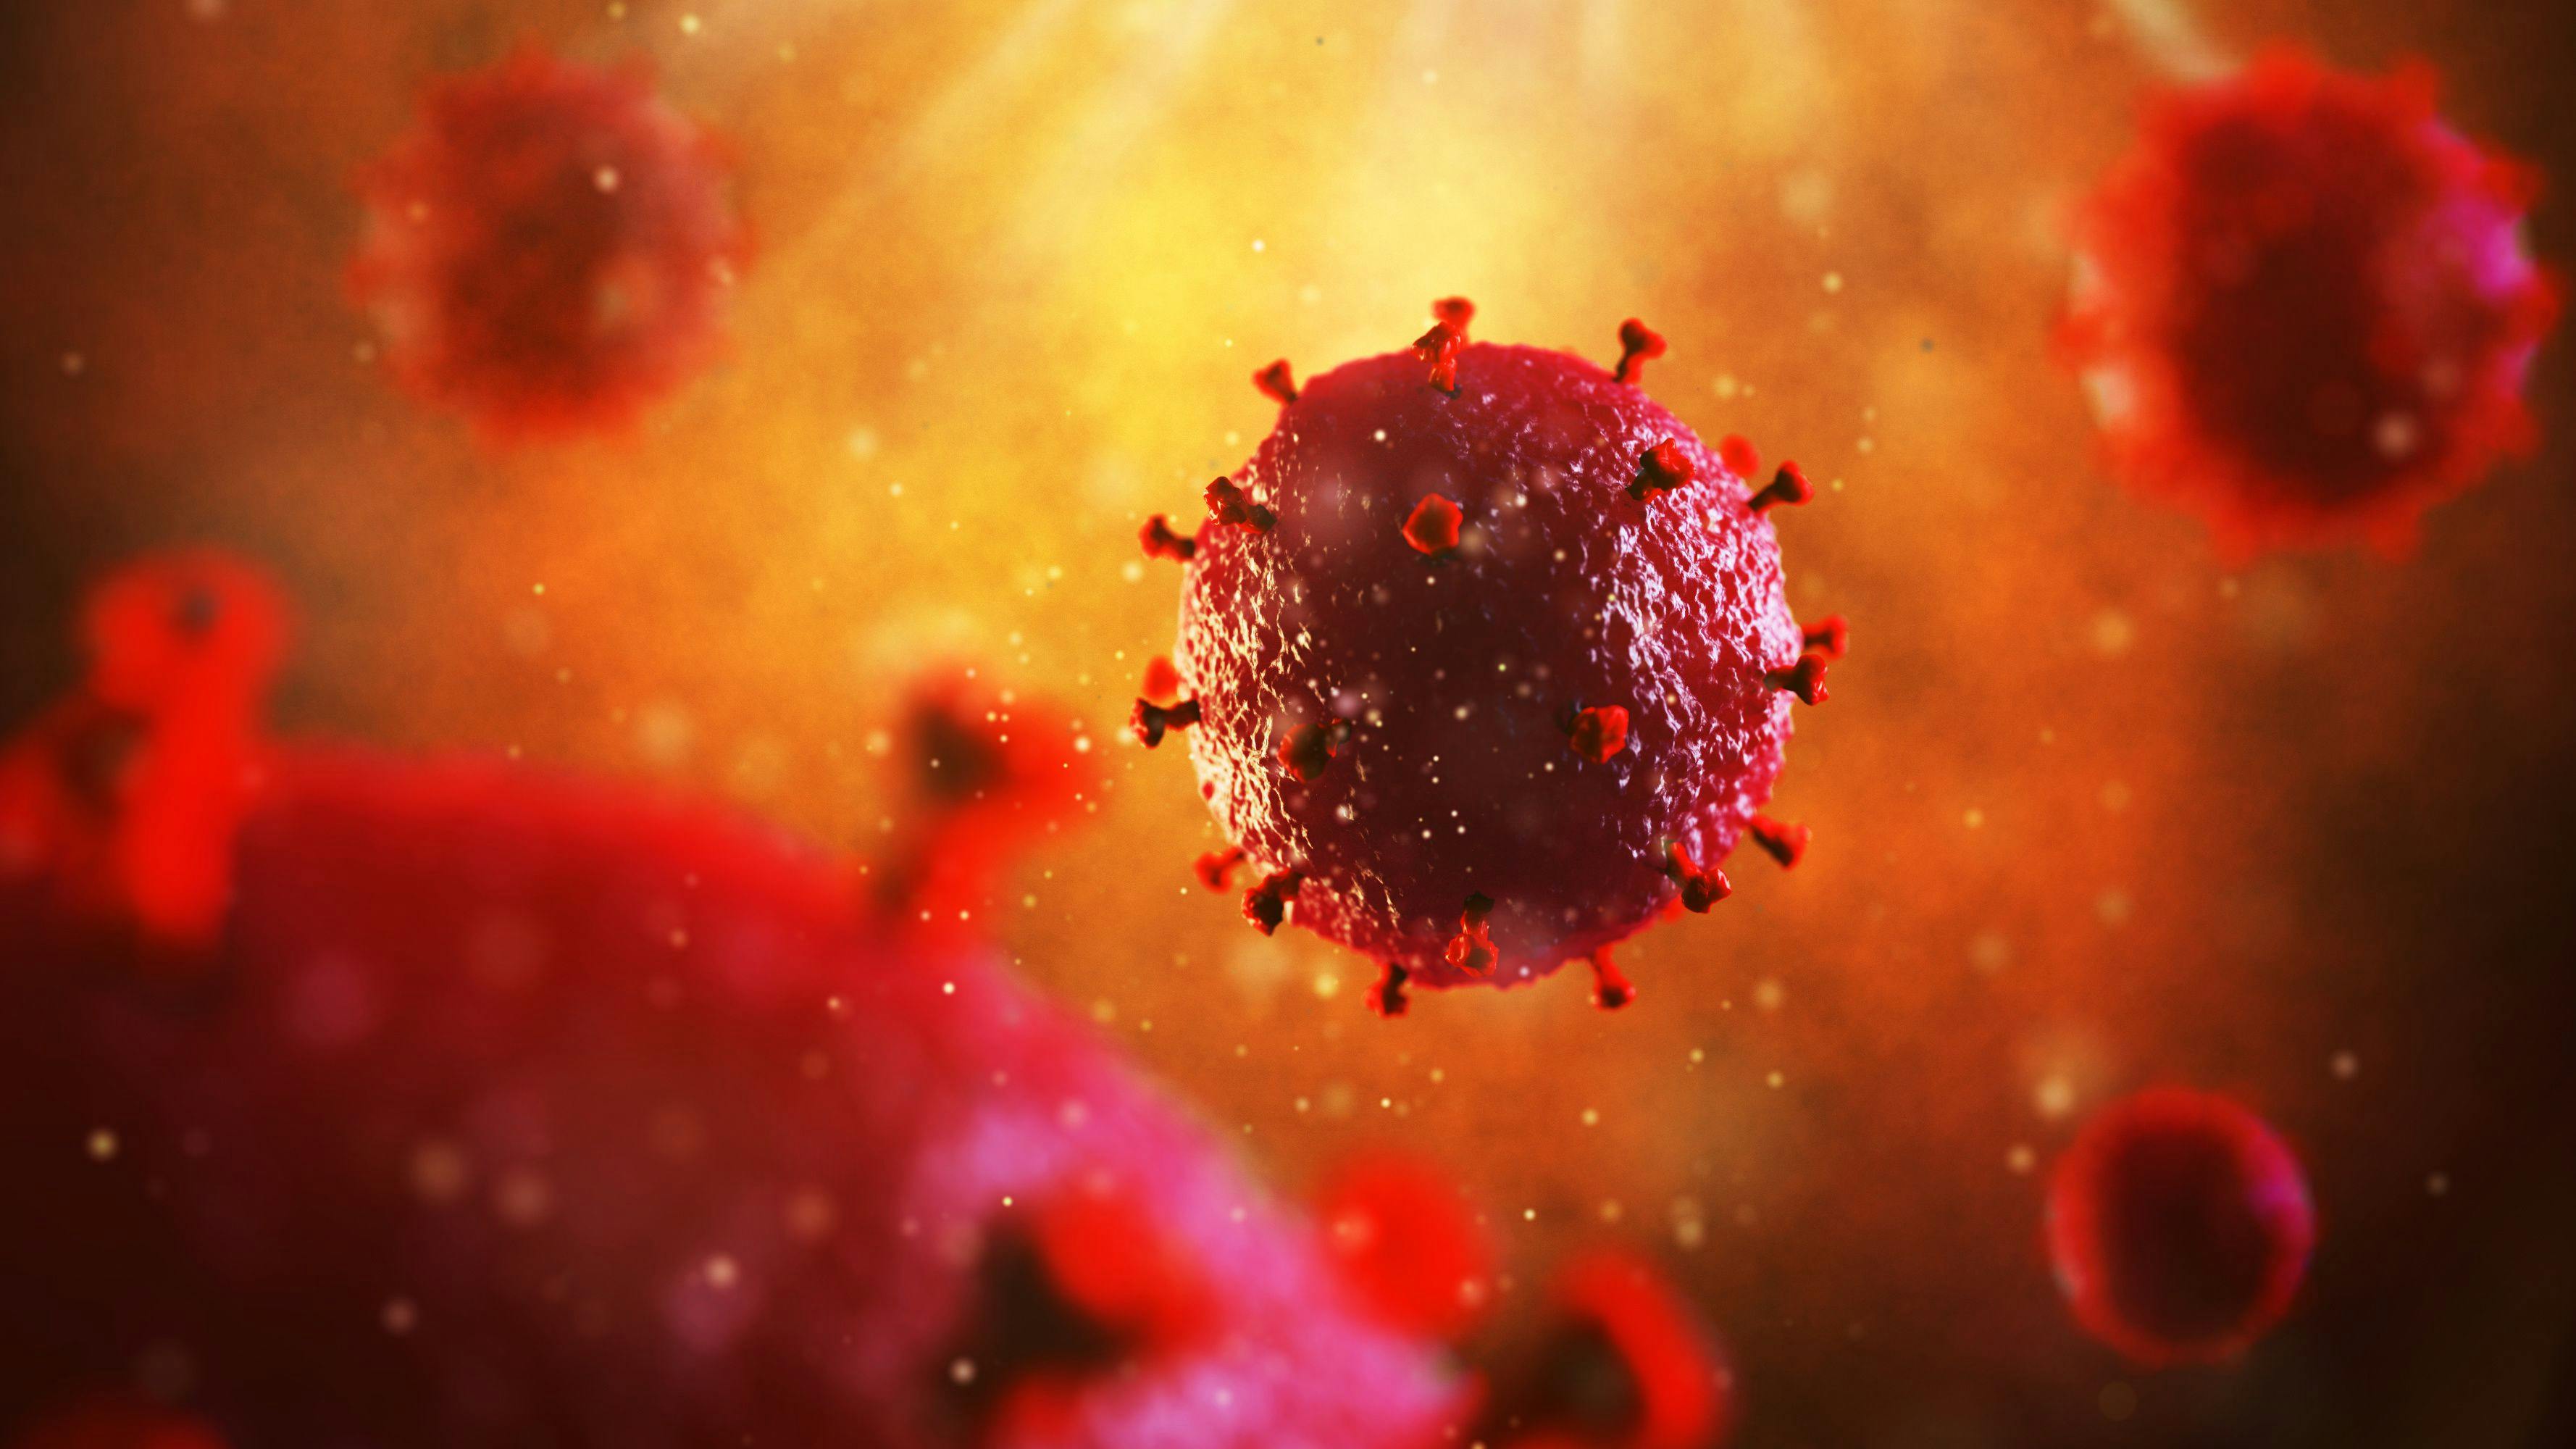 3d illustration of HIV virus | Image credit: artegorov3@gmail - stock.adobe.com